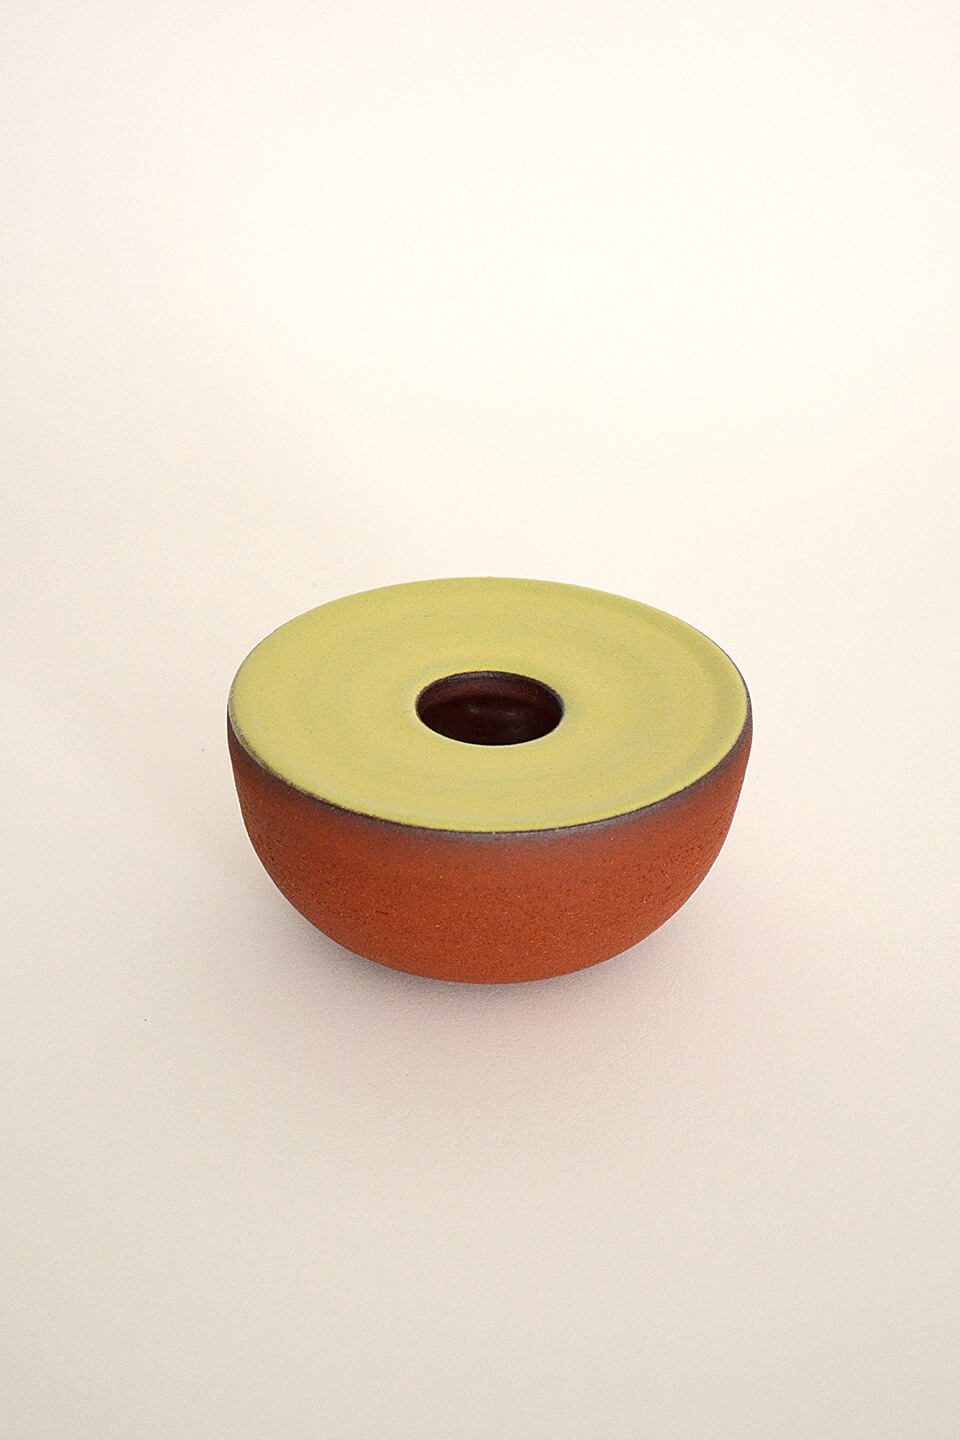 Satin Yellow Green Ceramic Vase No. 659